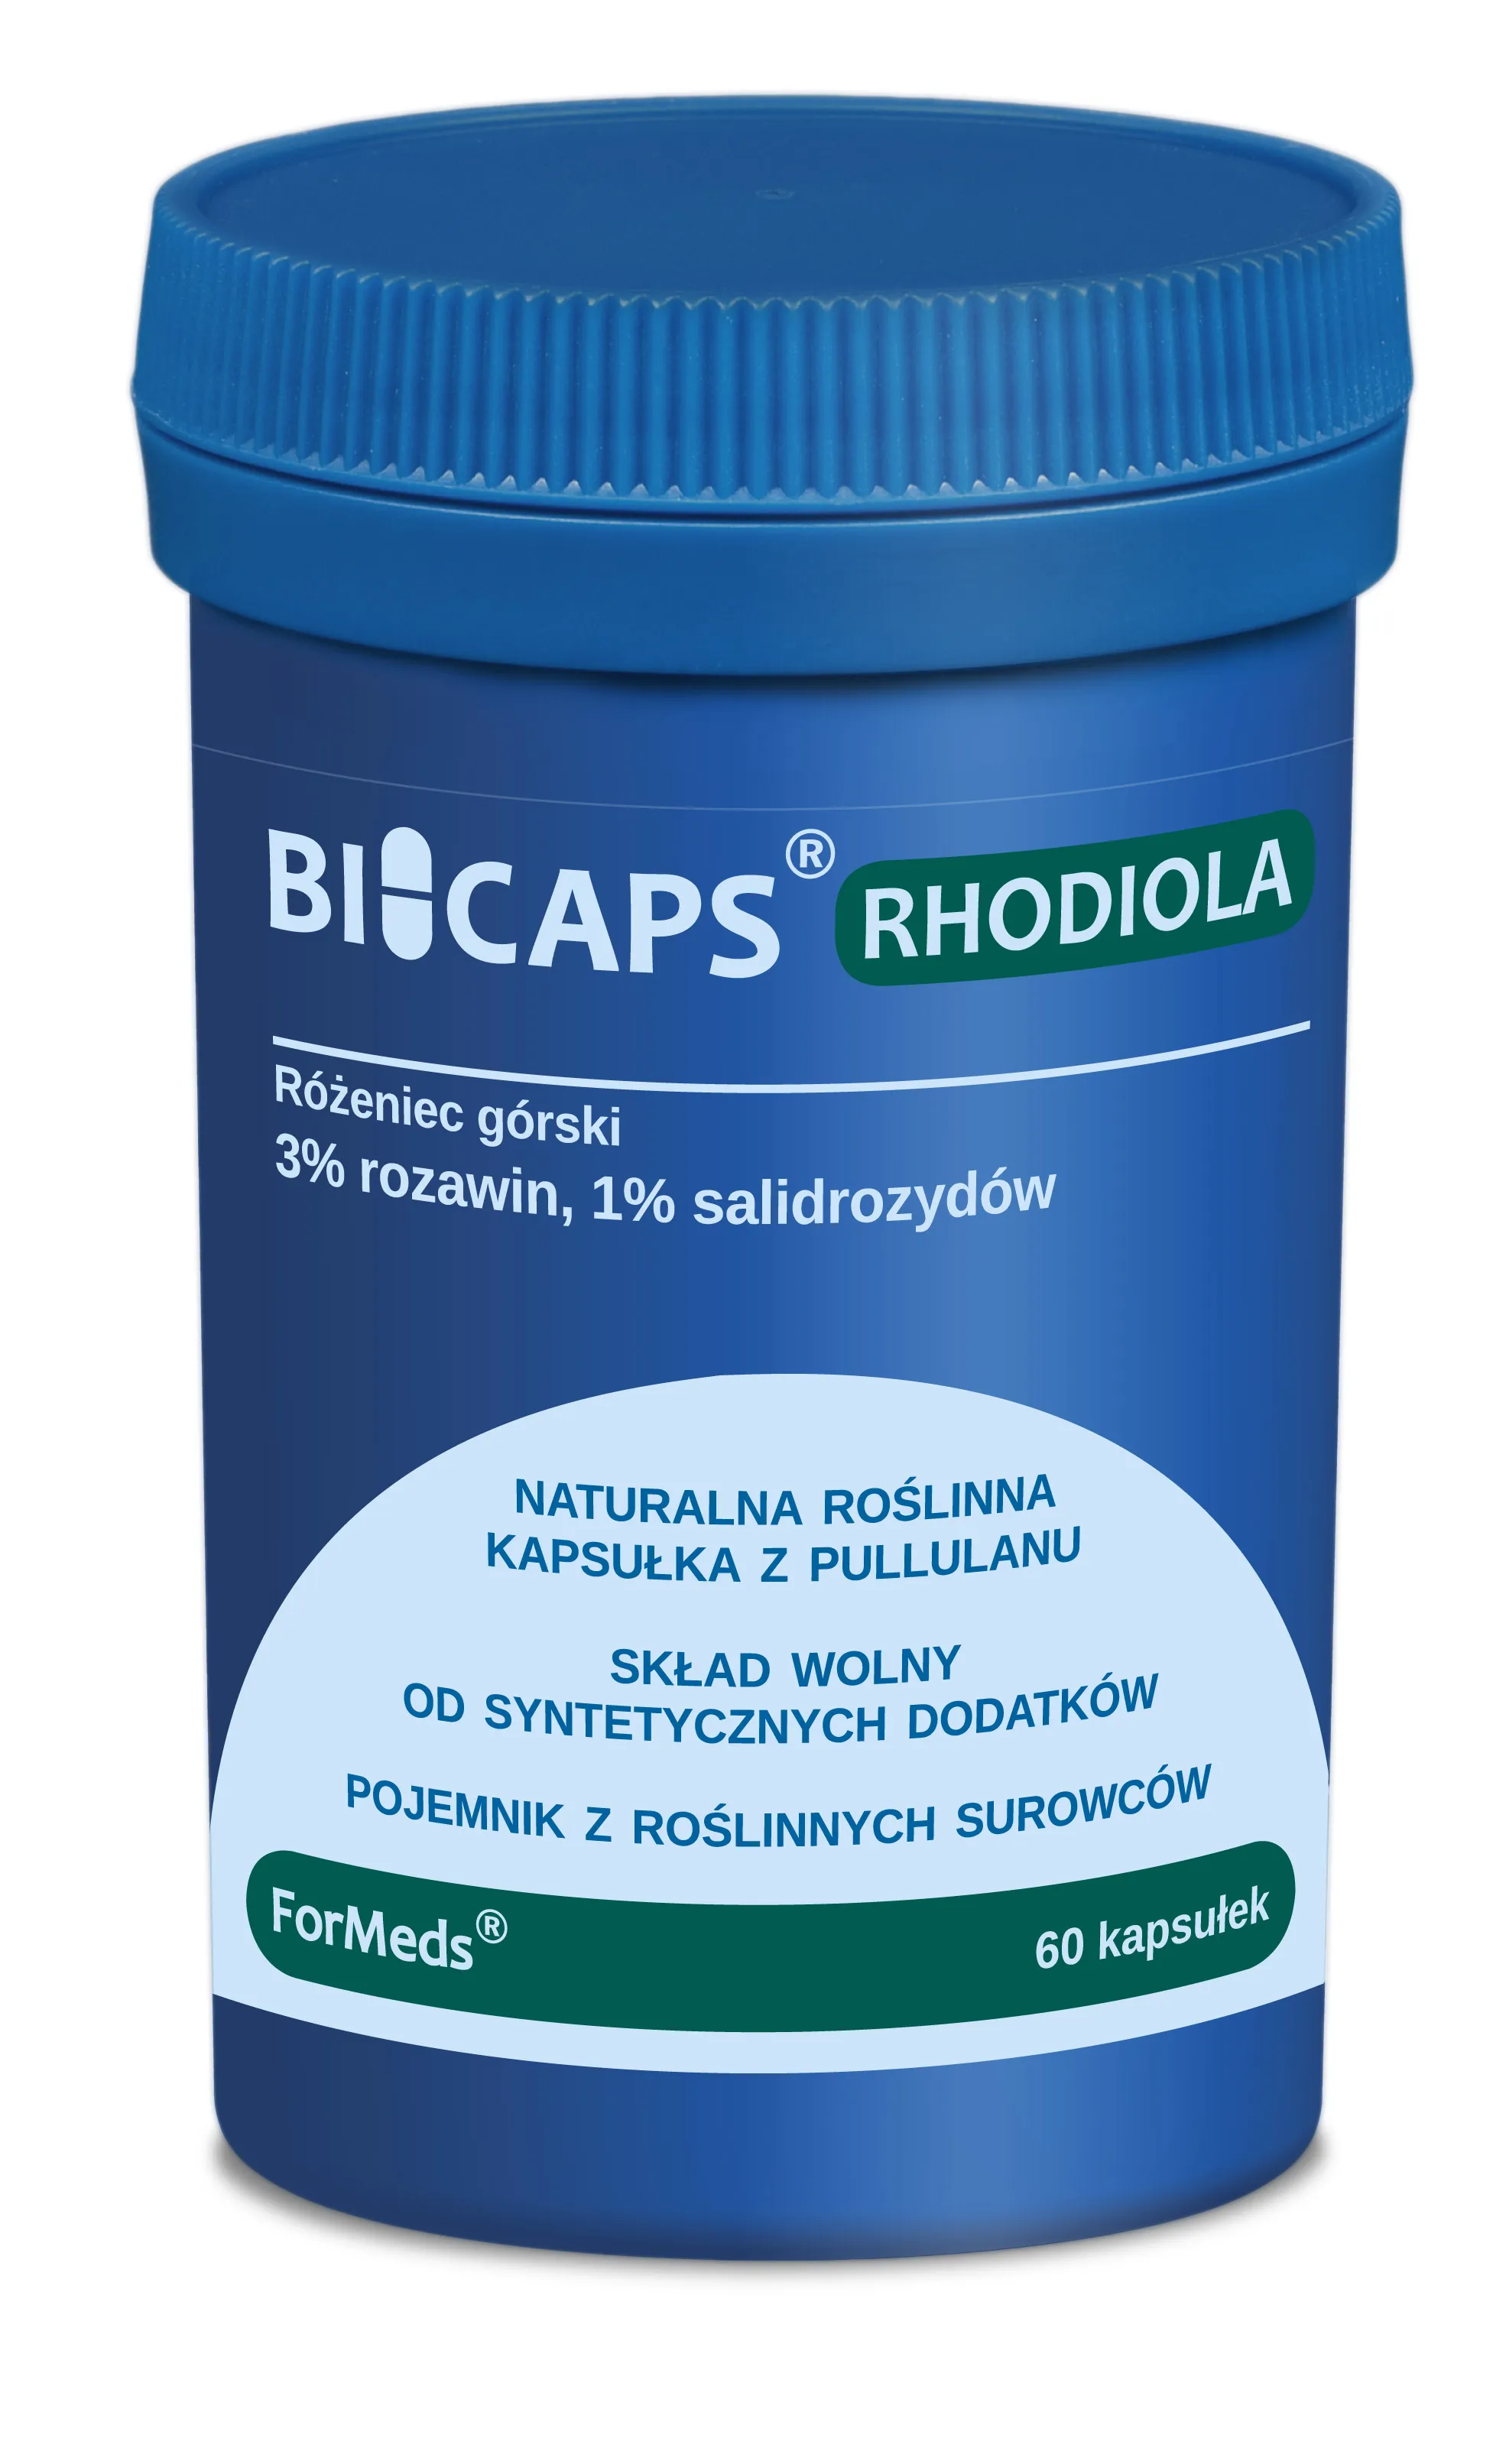 ForMeds Bicaps Rhodiola, suplement diety, 60 kapsułek